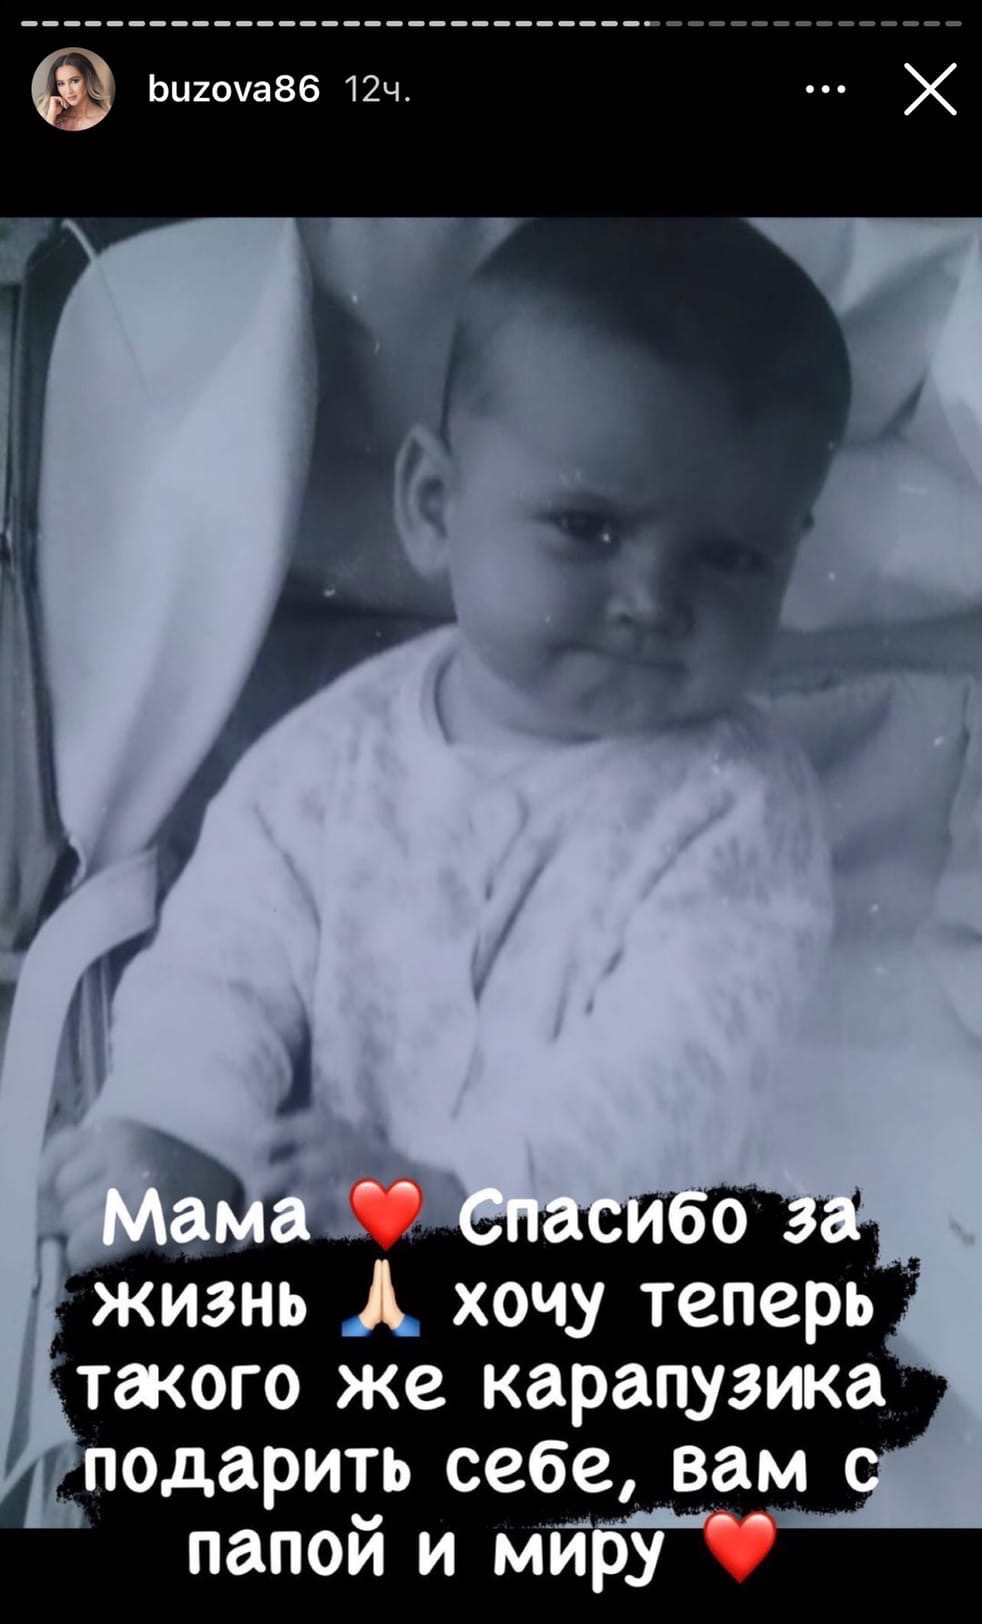 "Хочу карапузика": Ольга Бузова снова намекнула на беременность